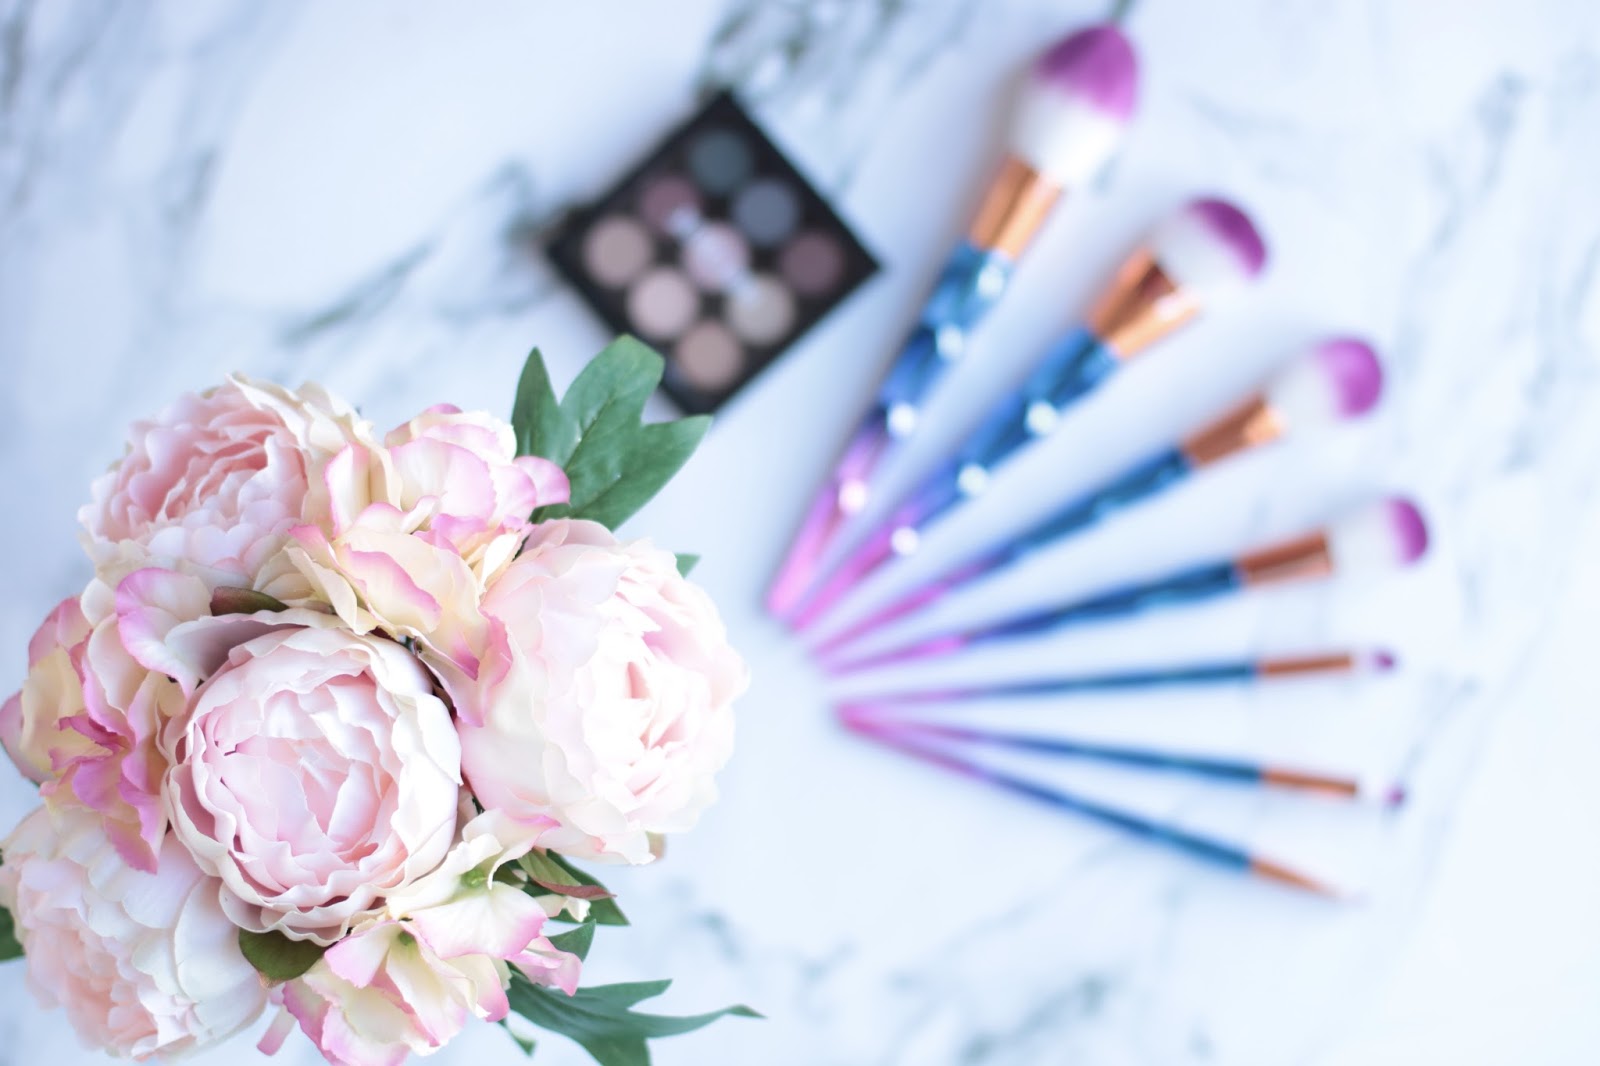  BeautyBigBang - Makeup Brushes Kit, Earth Tone Eyeshadow Palette Shimmer ( Review + Swatche ) | Ela Lis Make-Up